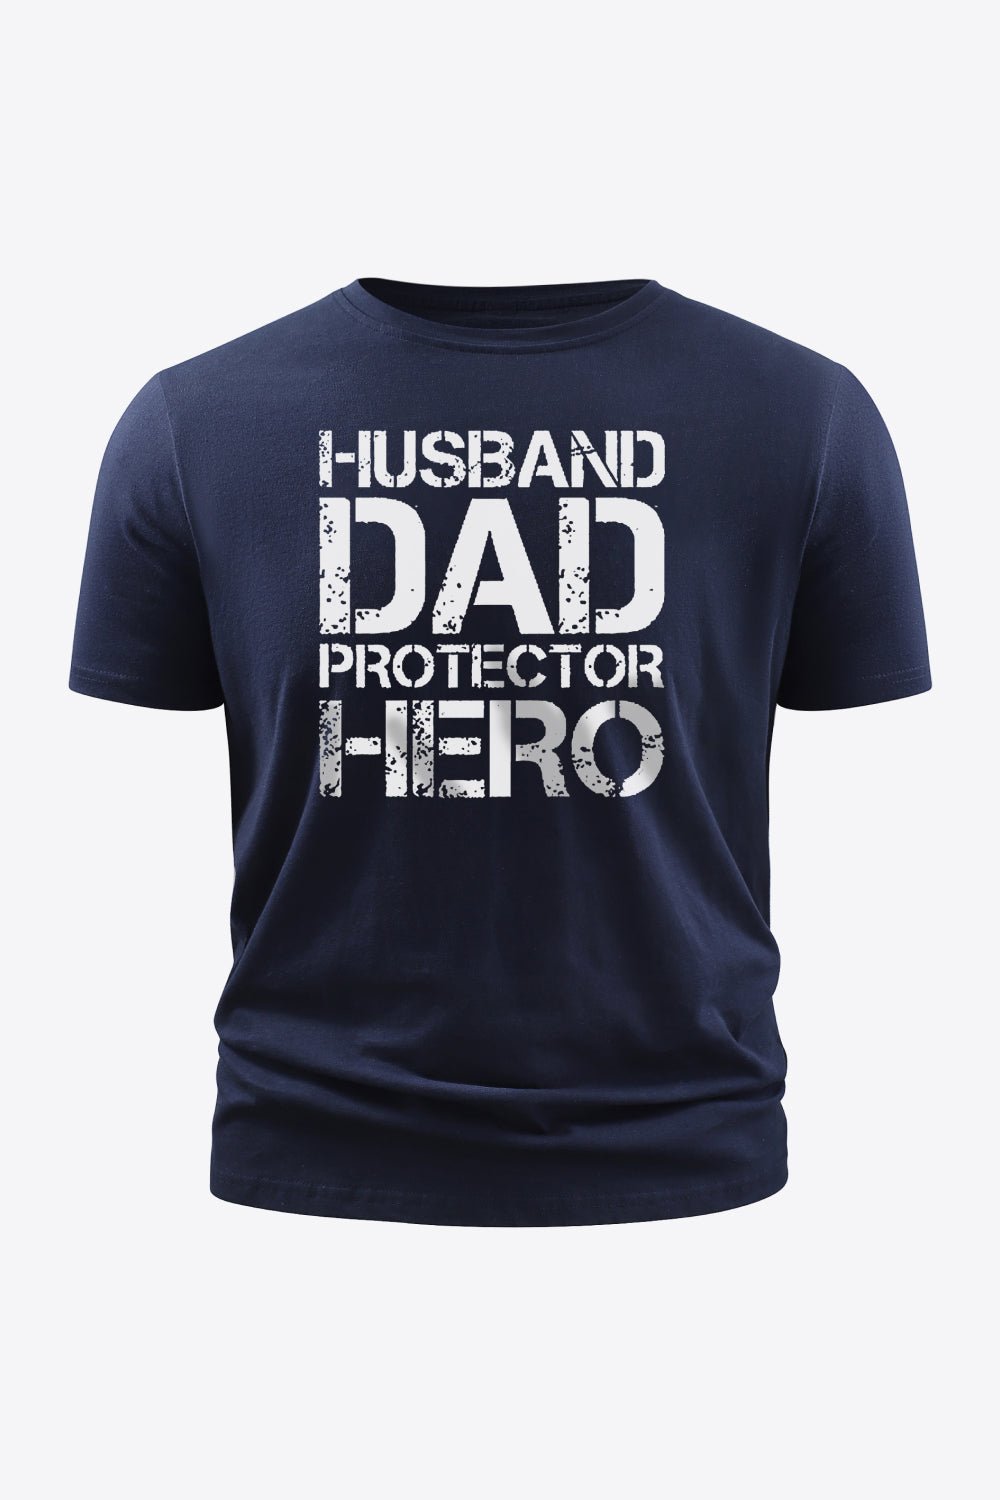 HUSBAND DAD PROTECTOR HERO Graphic Tee